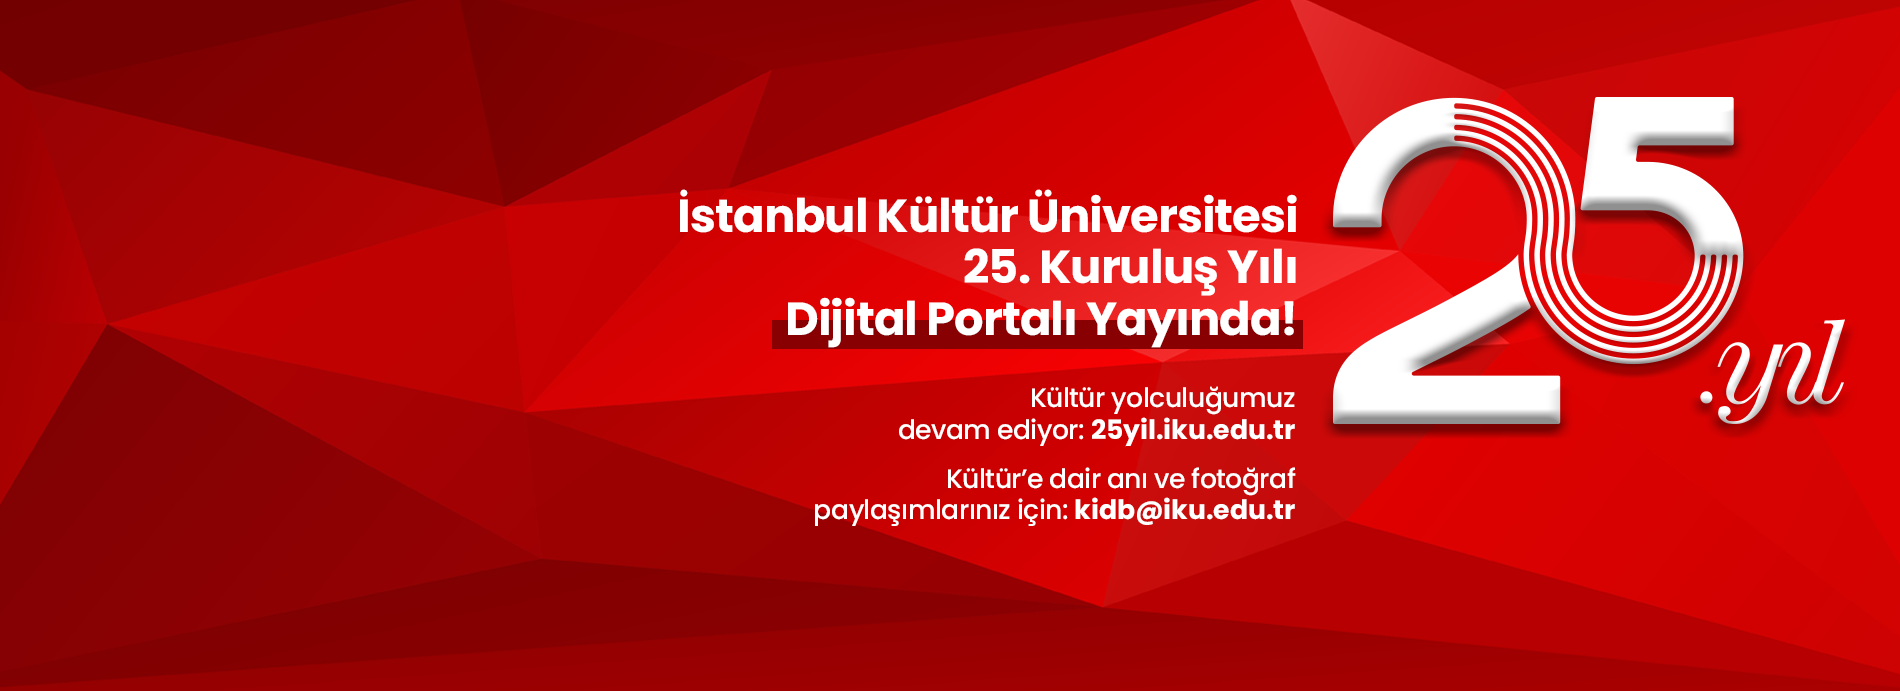 https://www.iku.edu.tr/tr/haberler/istanbul-kultur-universitesinin-25-yili-web-sitesi-yayina-acildi